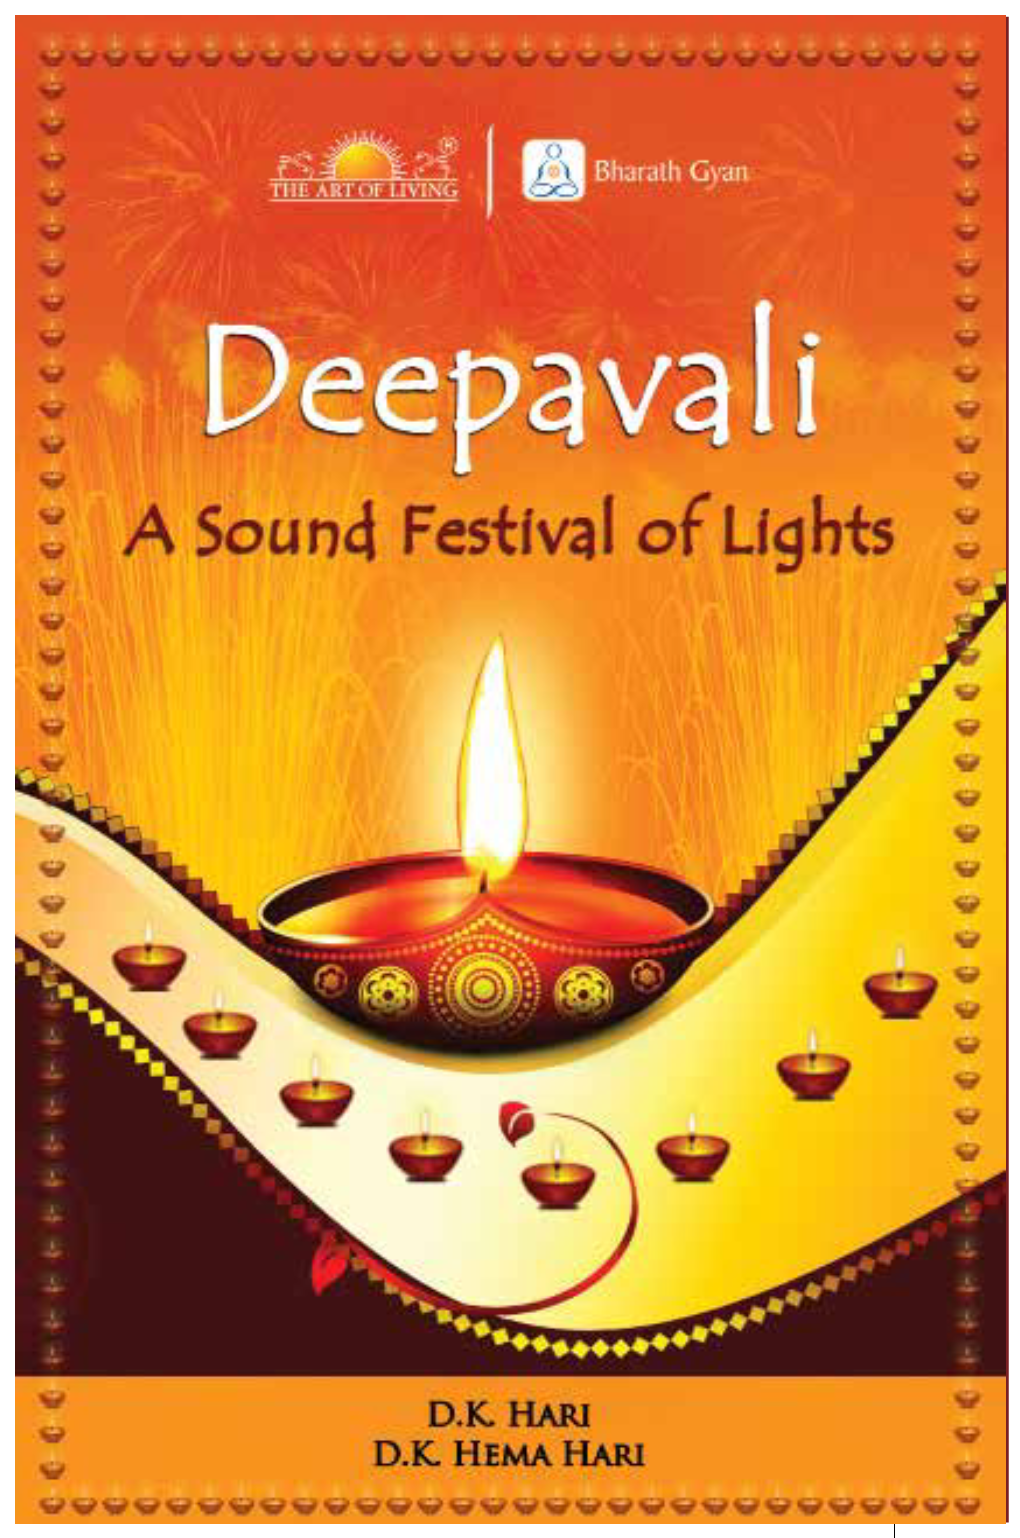 Deepavali - a Sound Festival of Lights Contents